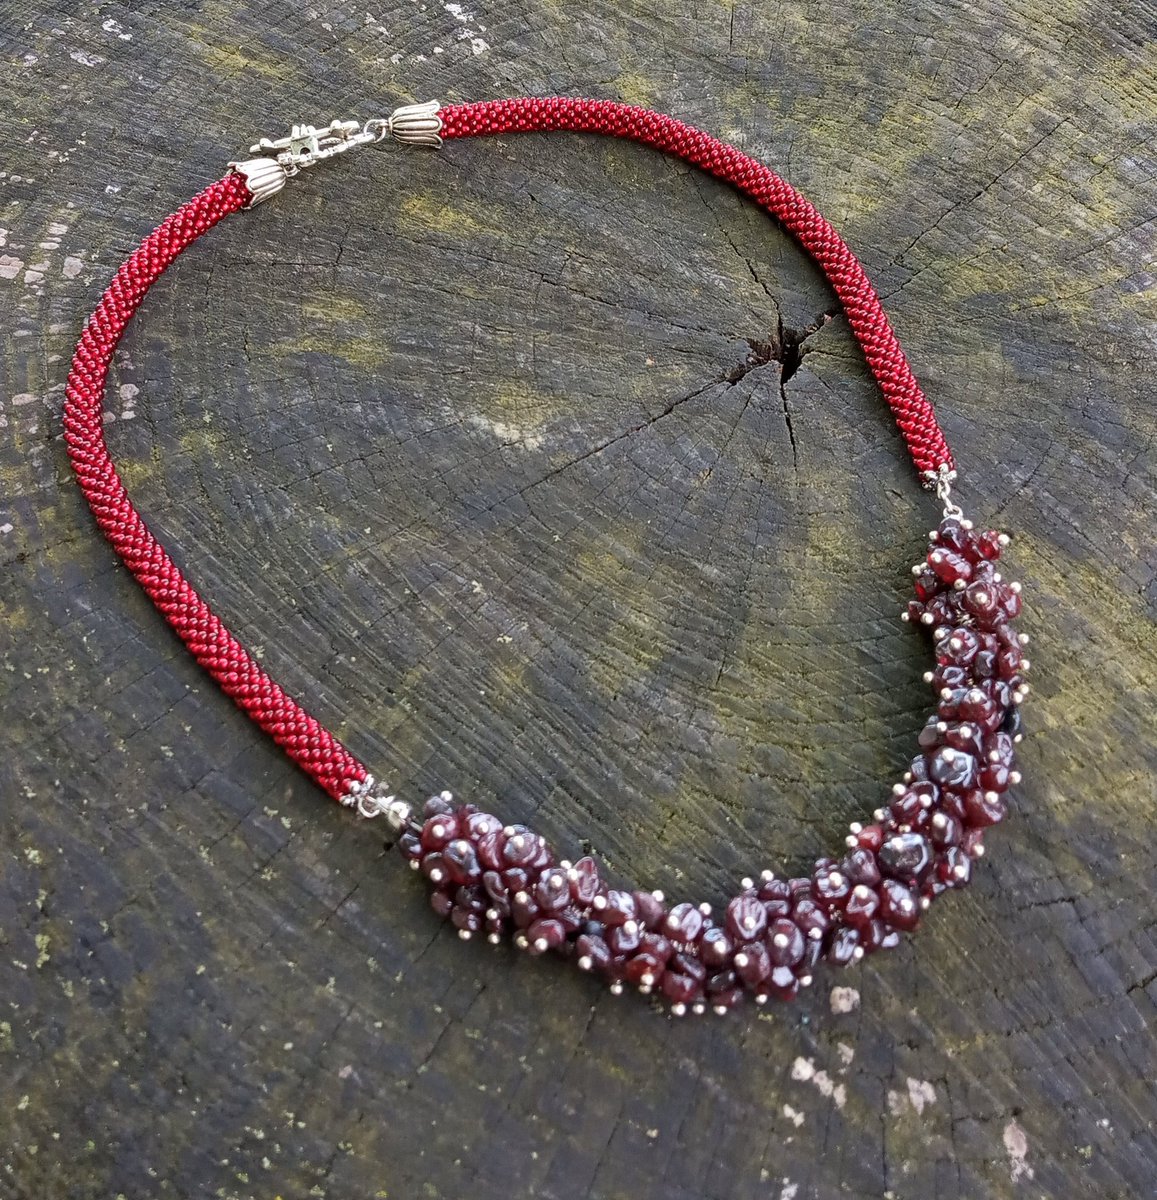 21' #Garnet necklace. Red seed bead #necklace. #Gemstonenecklace #Flappernecklace in my #Etsy shop etsy.com/listing/854402…